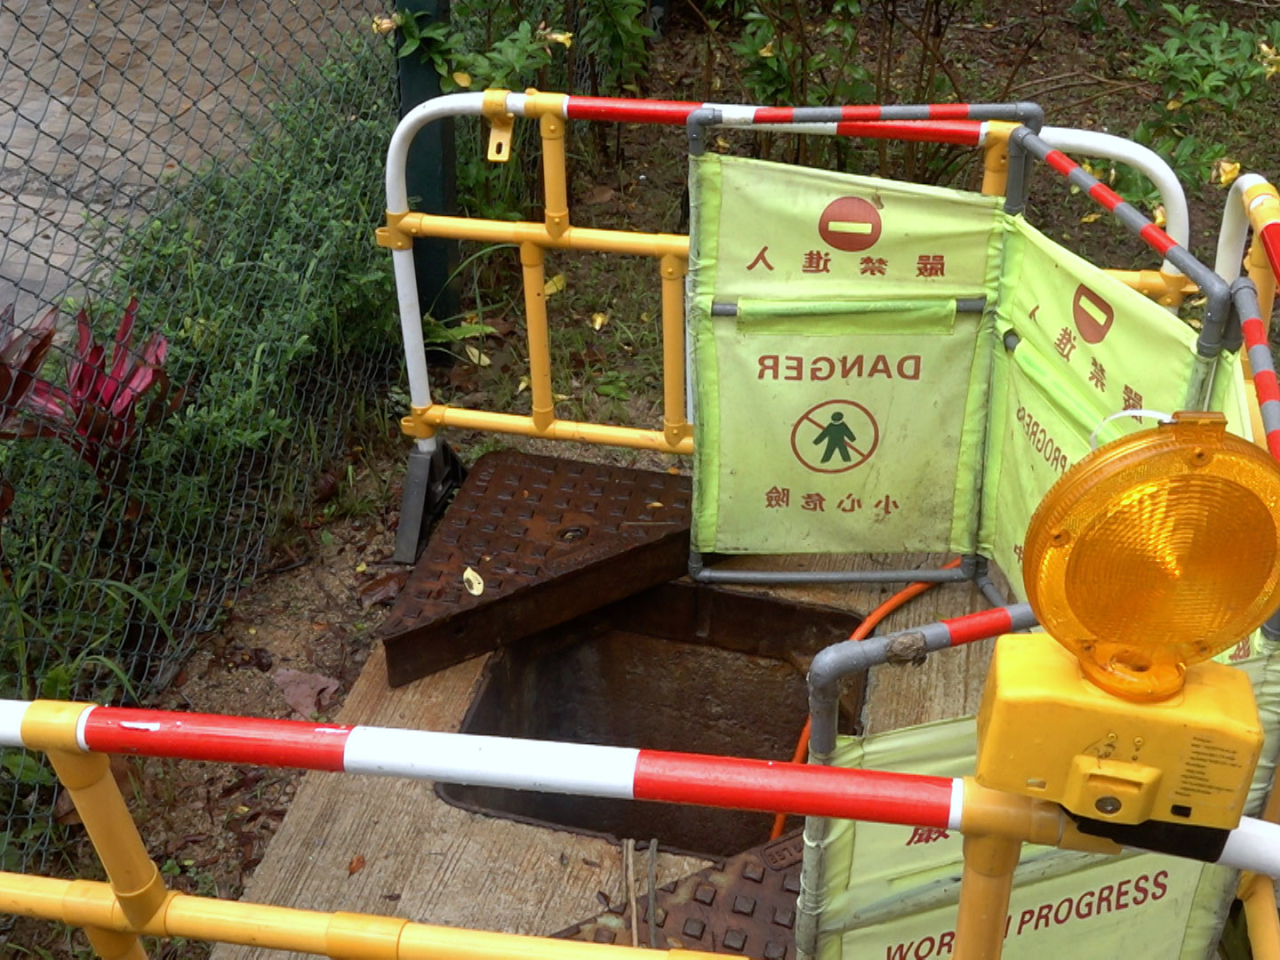 'Precautions also apply to sites near manholes'